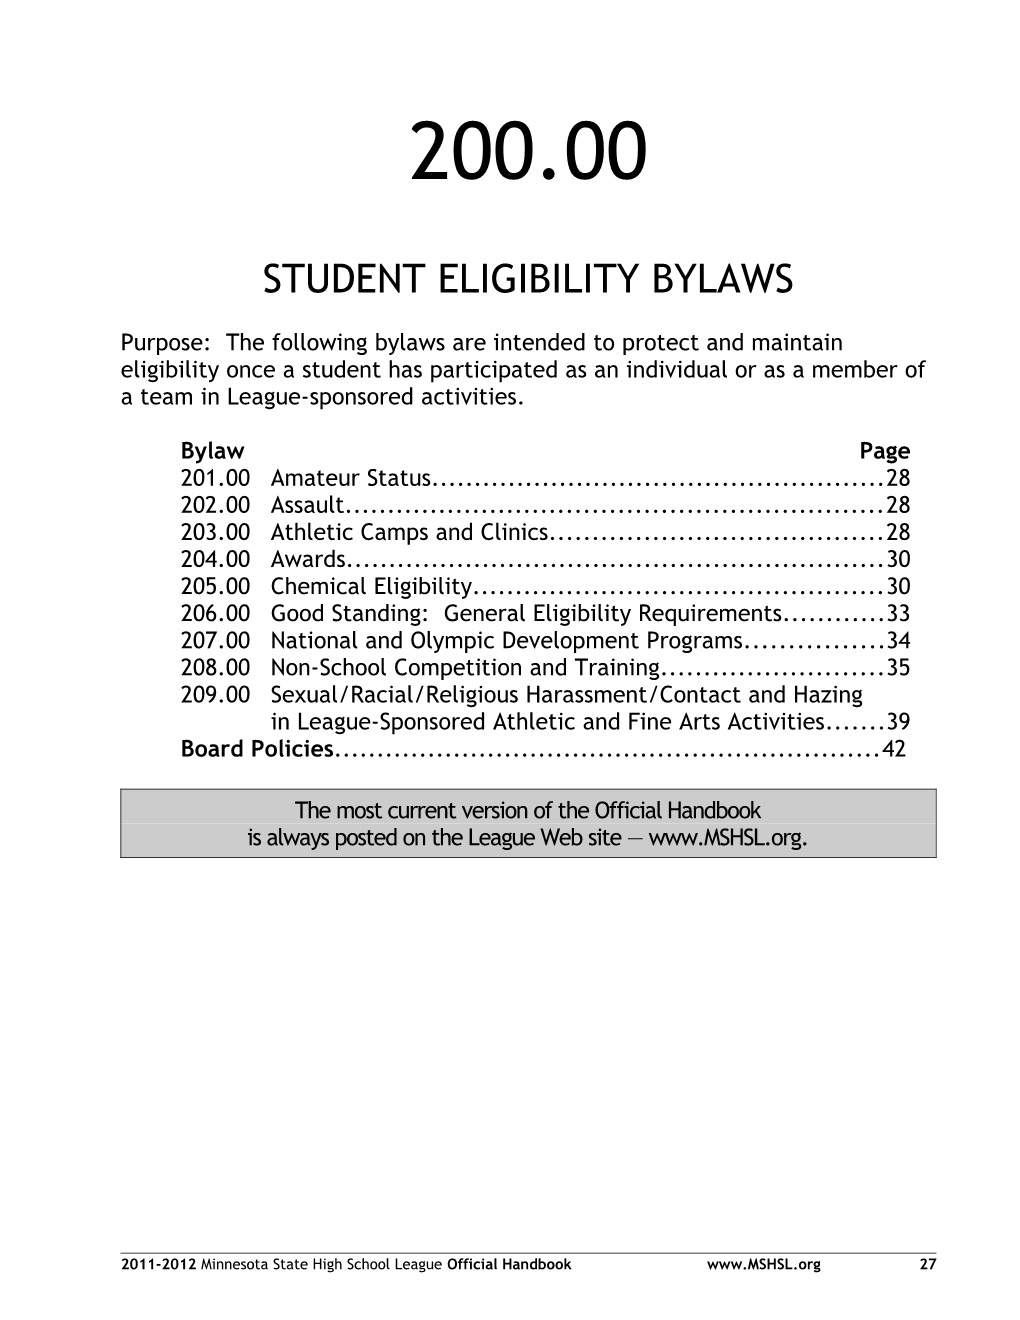 200.00 Bylaws: Student Eligibility